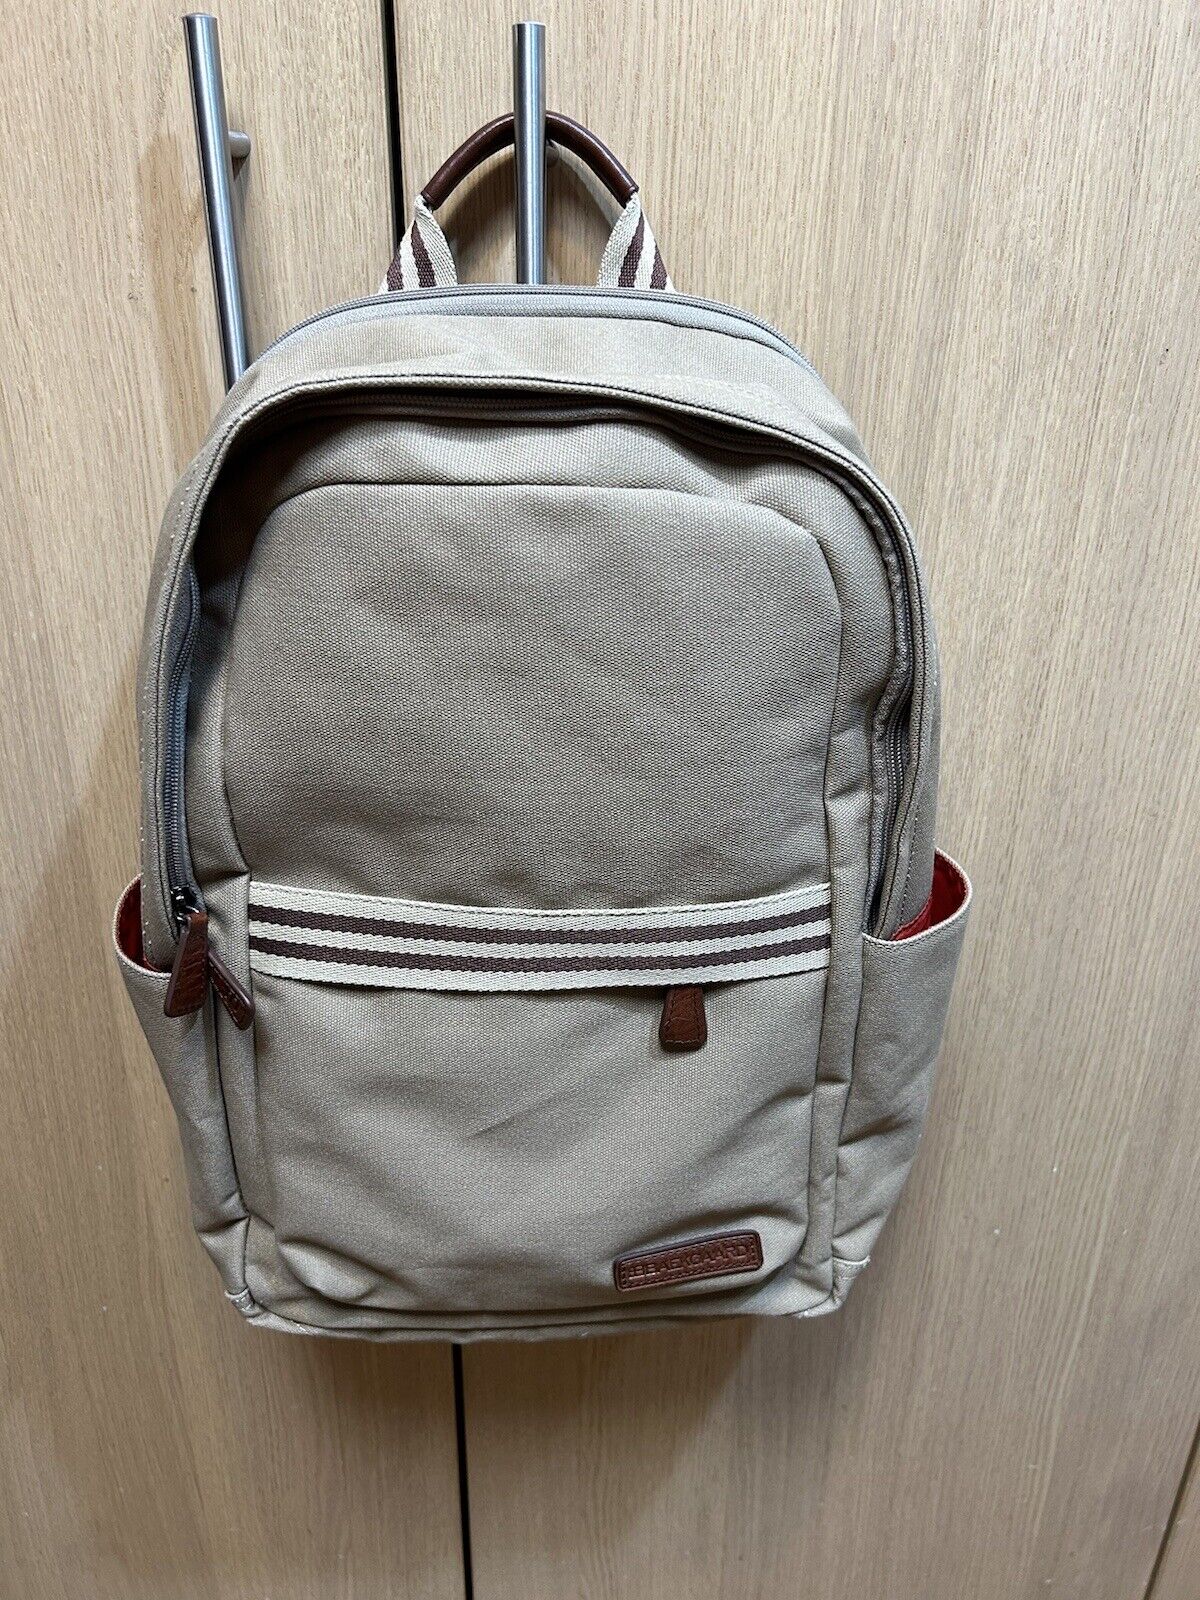 Baekgaard Teddy Zipper Backpack Beige Canvas Italian Leather Accents Laptop Bag